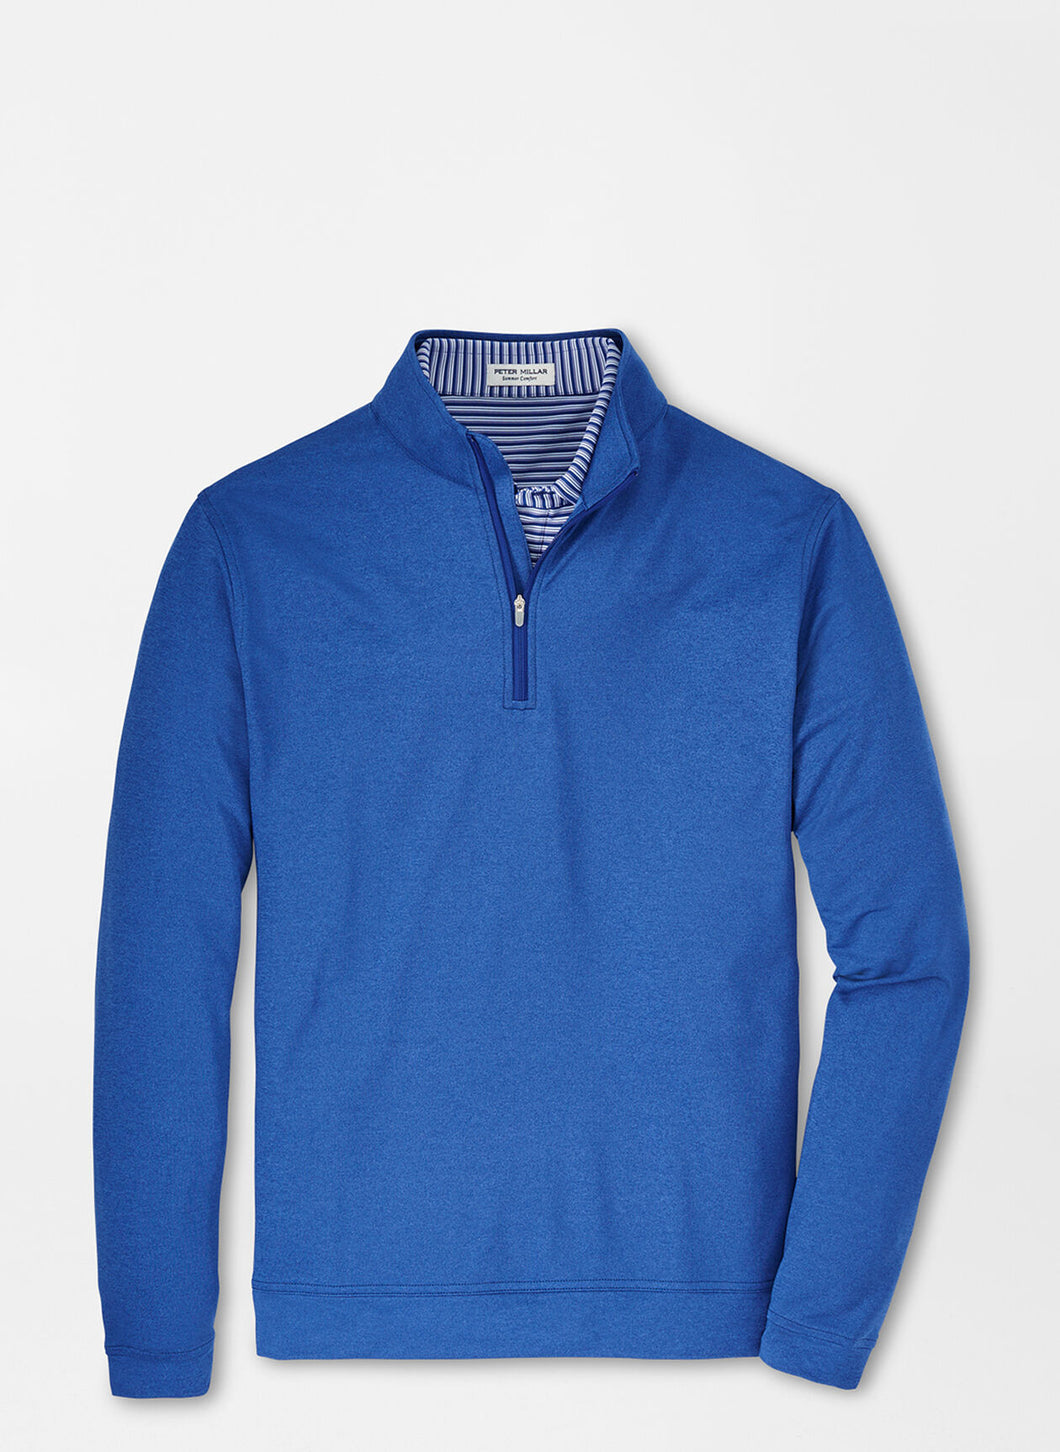 Peter Millar Perth Melange 1/4 Zip Sweater / Medium / Starboard Blue